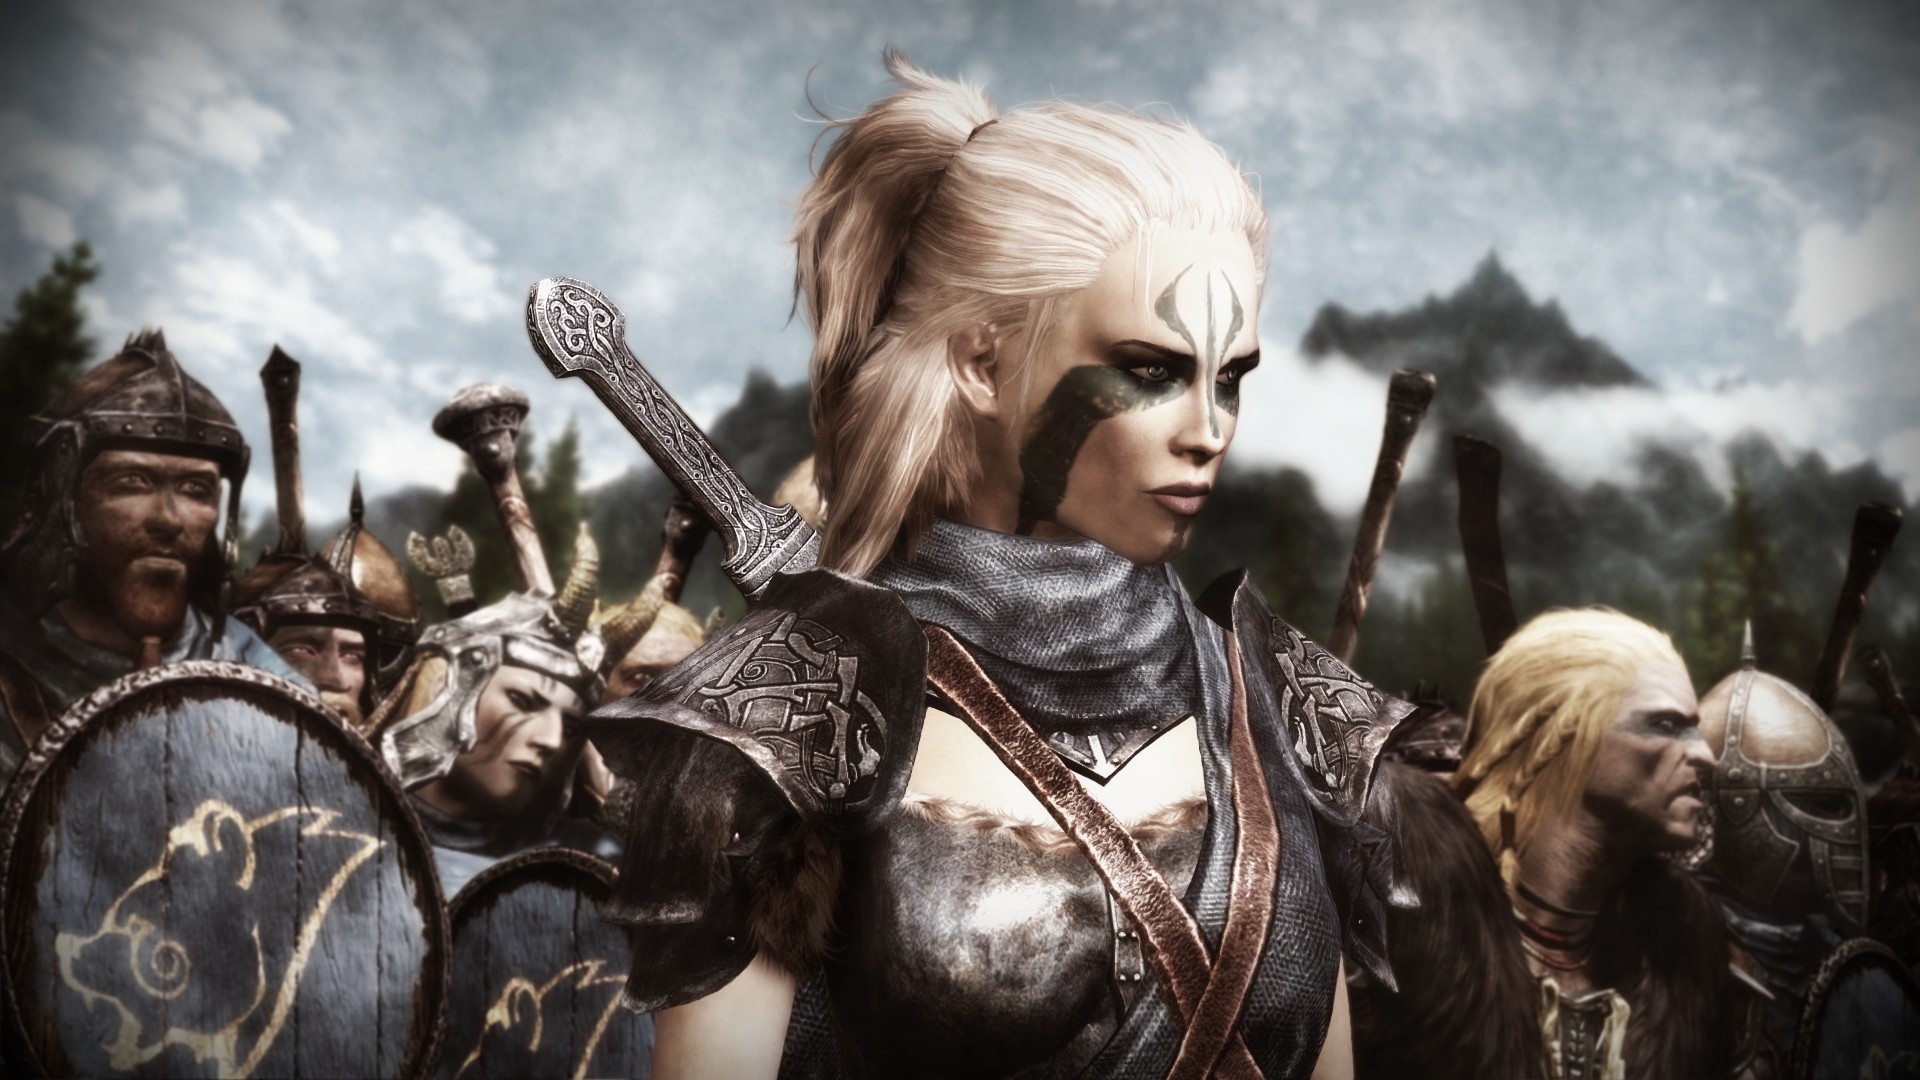 General 1920x1080 The Elder Scrolls V: Skyrim army fantasy girl blonde video games PC gaming video game girls warrior RPG